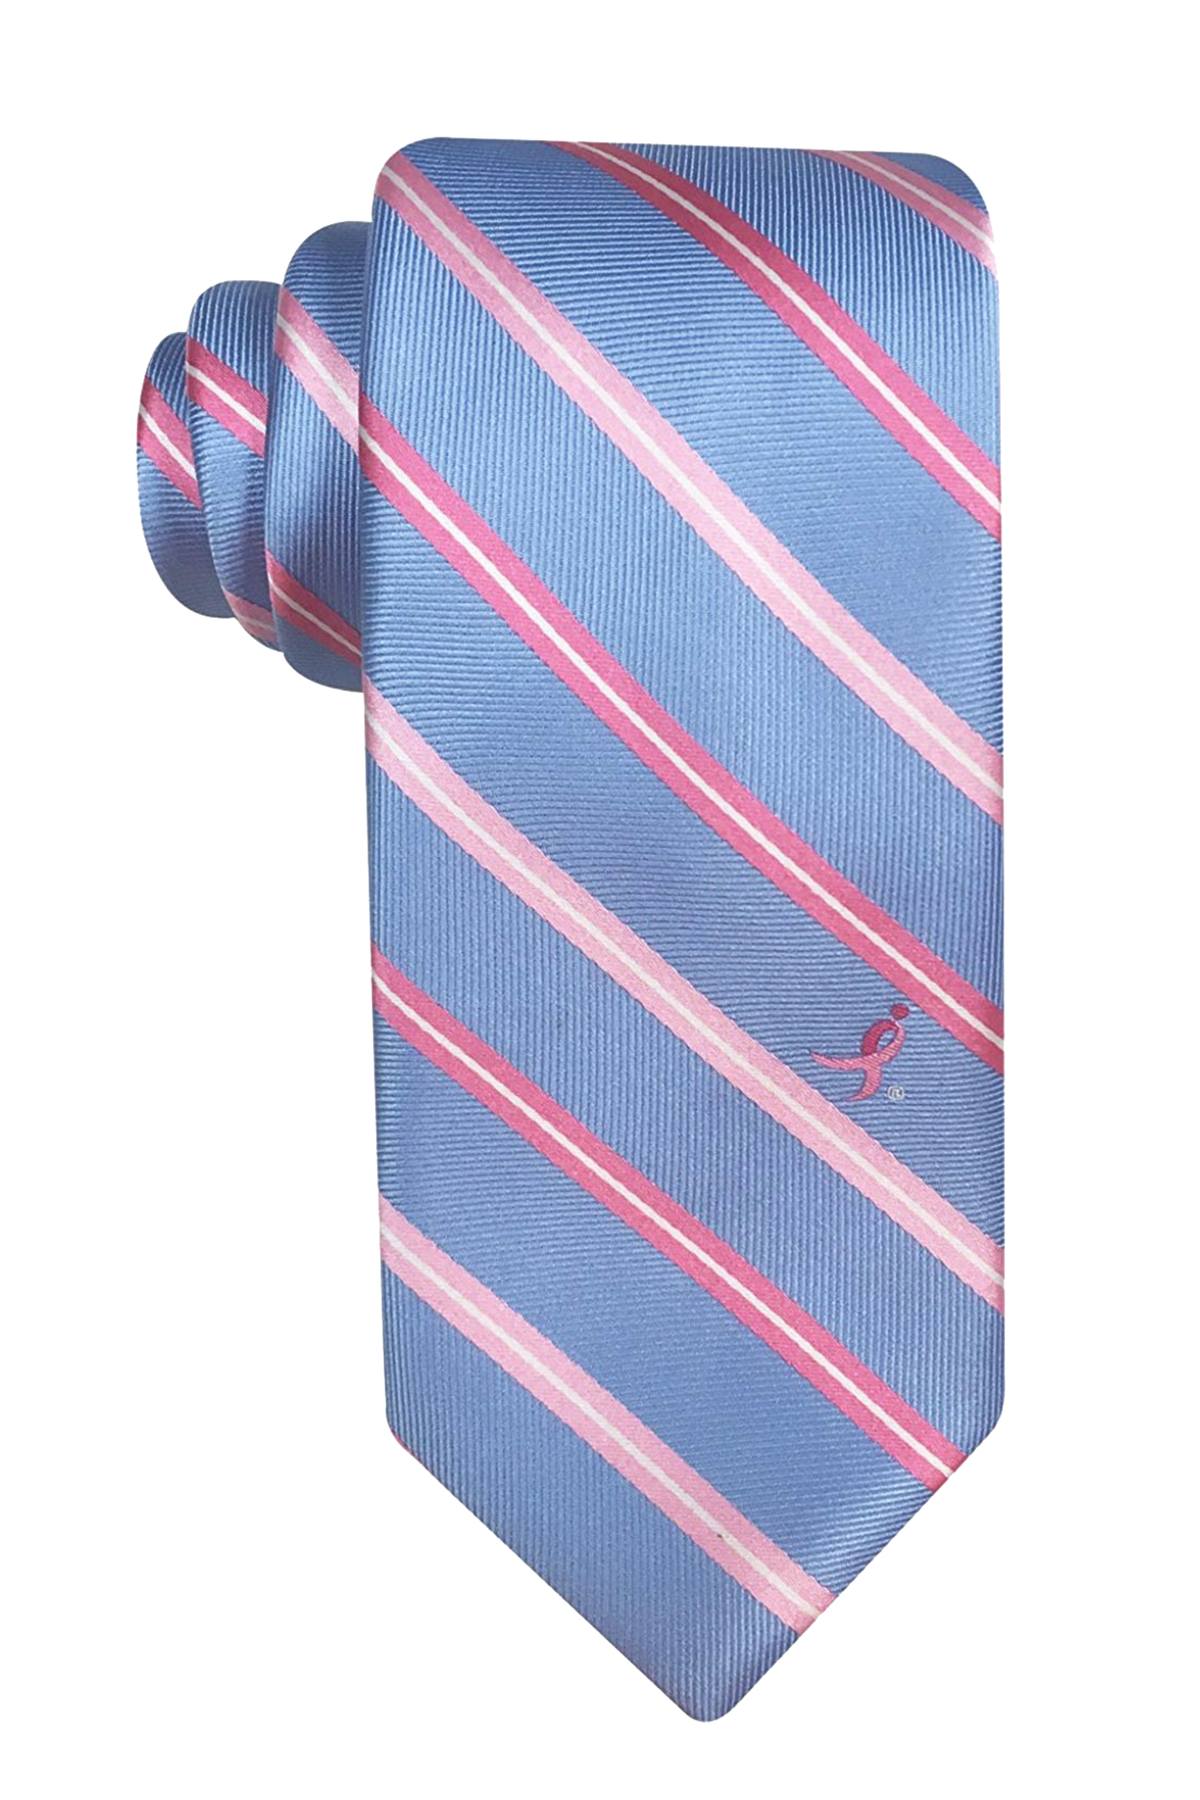 Susan G. Komen Medium-Blue/Pink Striped 'Knots for Hope' Necktie